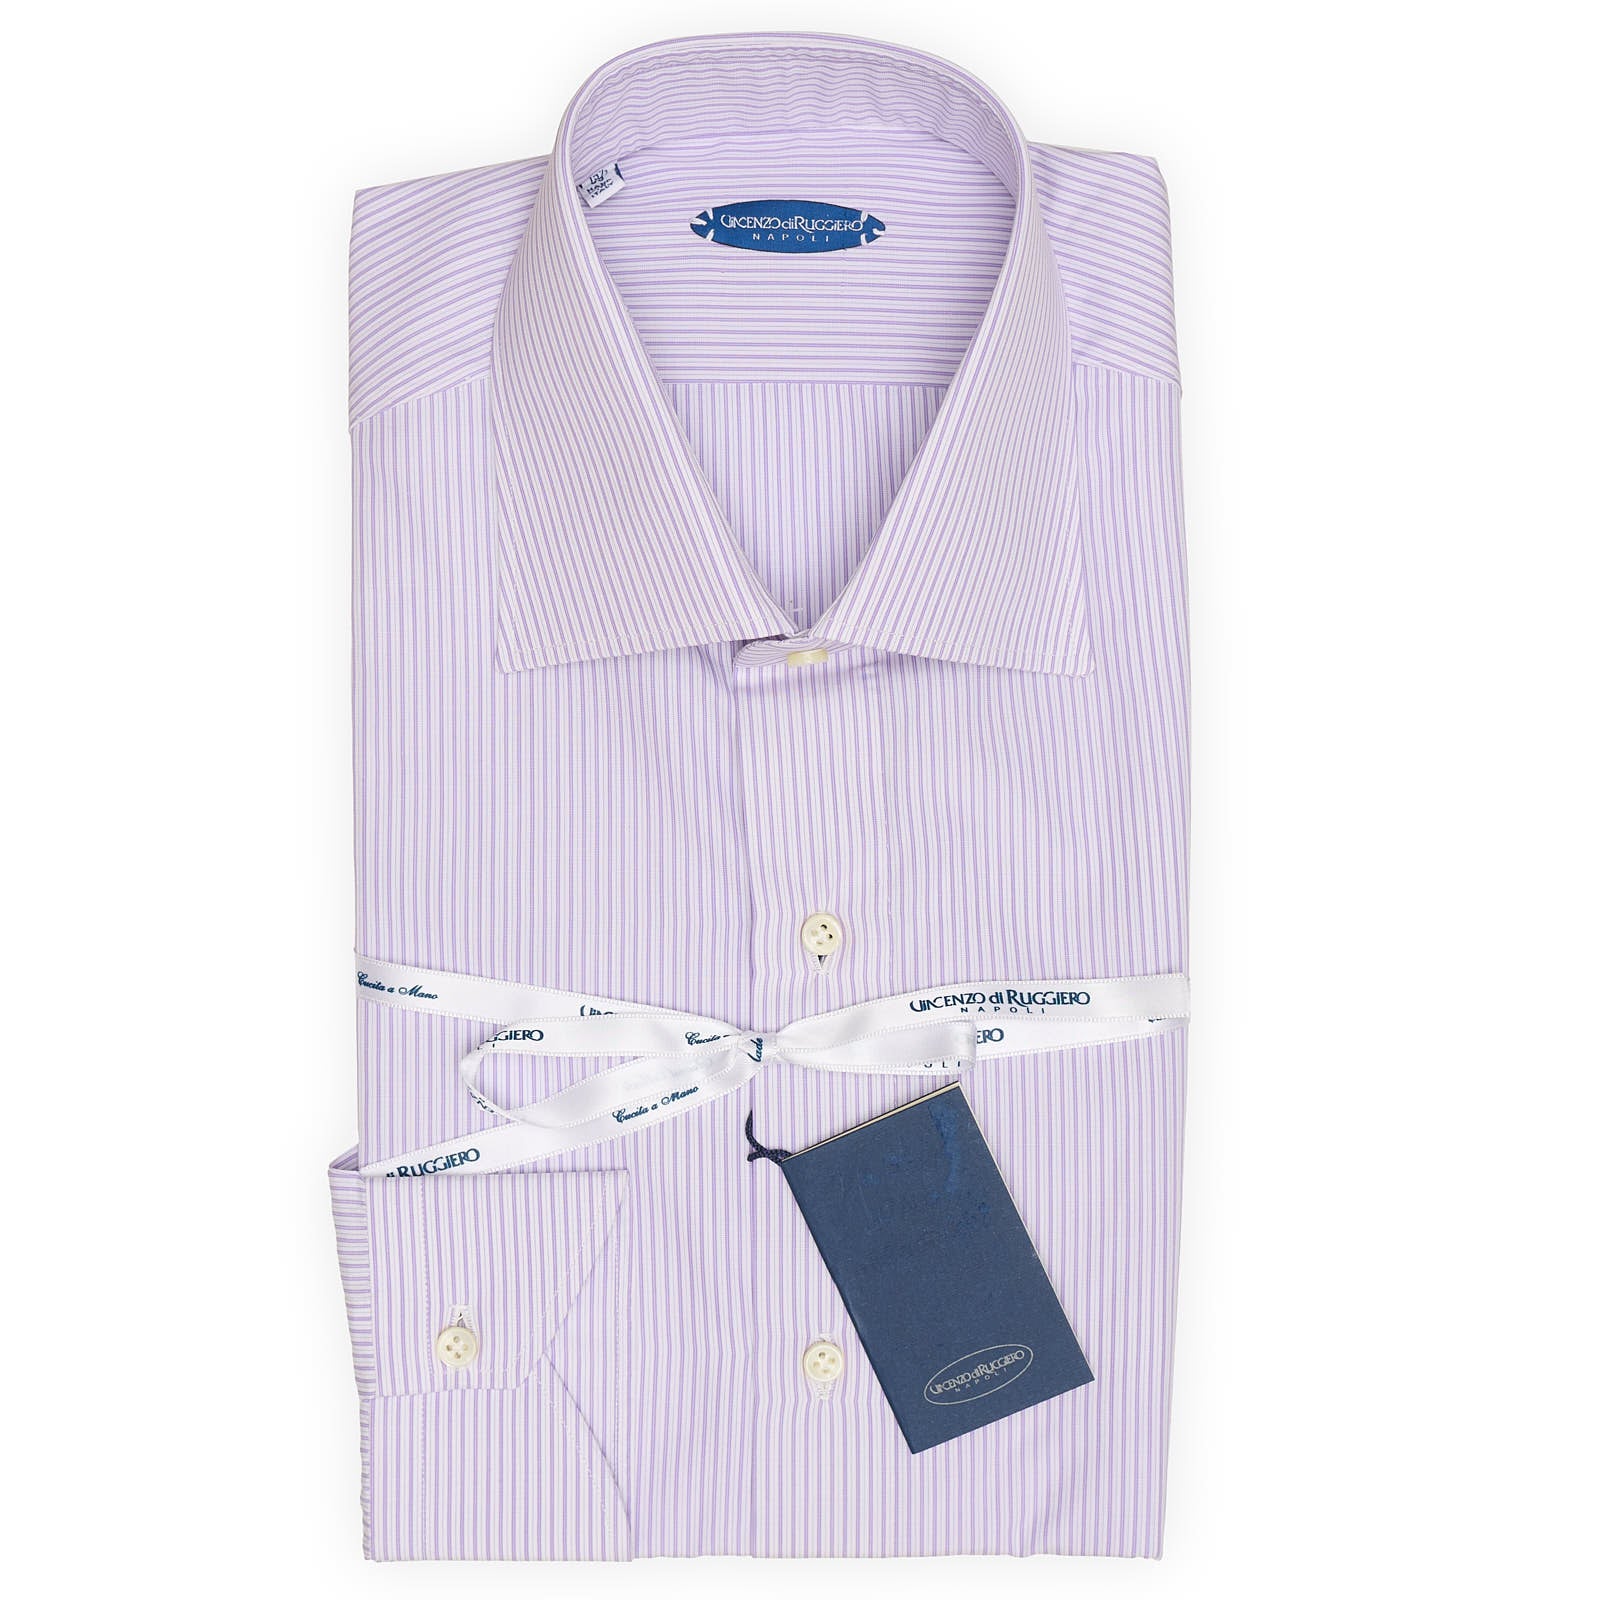 VINCENZO DI RUGGIERO Handmade Purple Striped Cotton Dress Shirt EU 39 NEW US 15.5